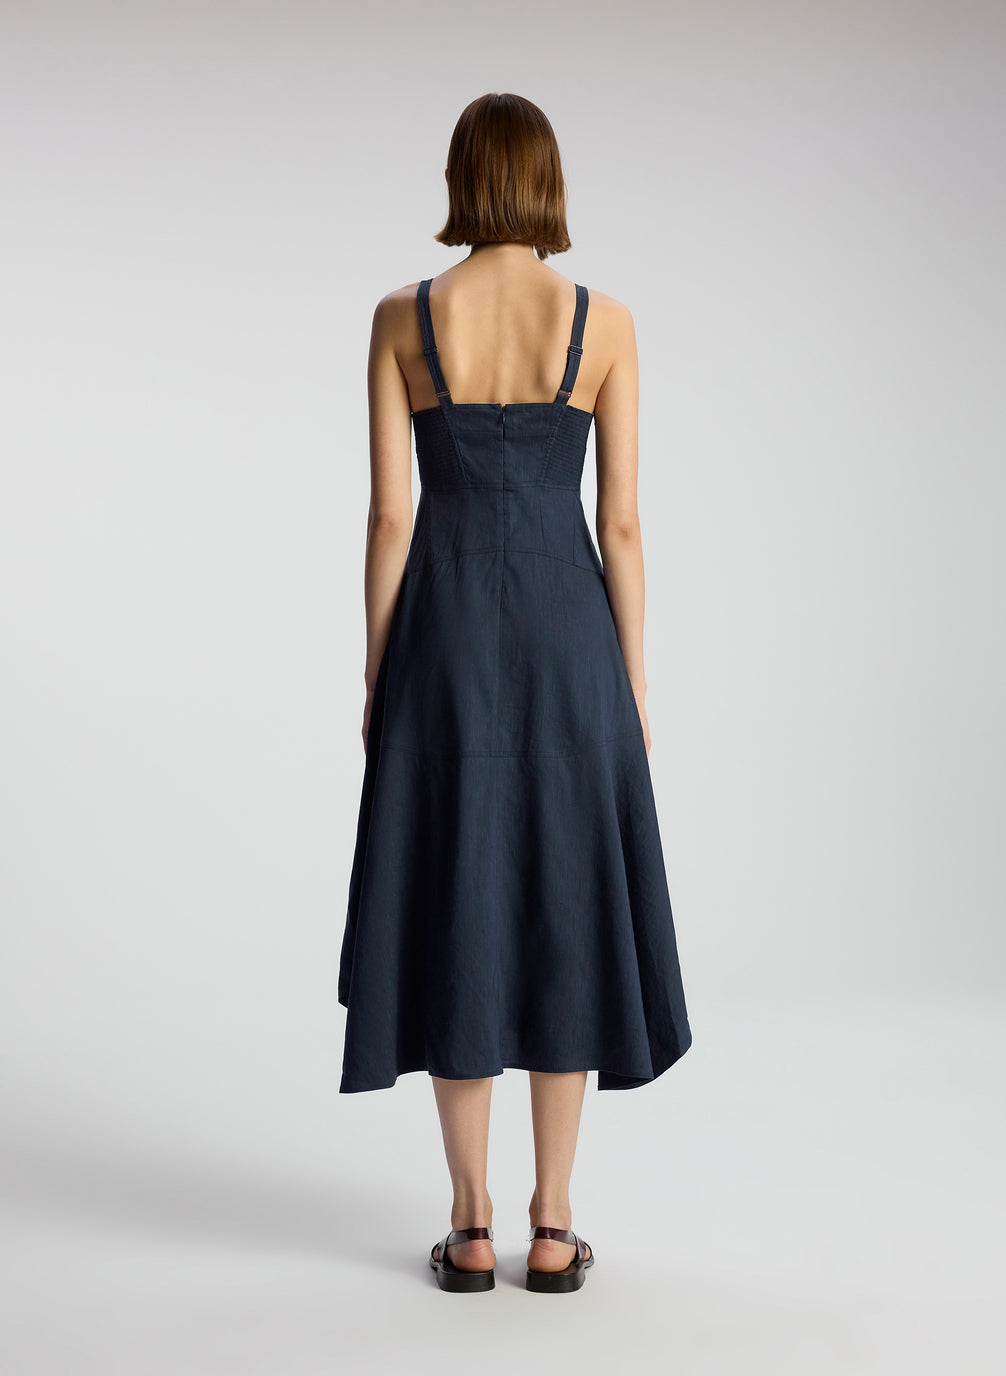 back view of woman wearing navy blue sleeveless midi dress